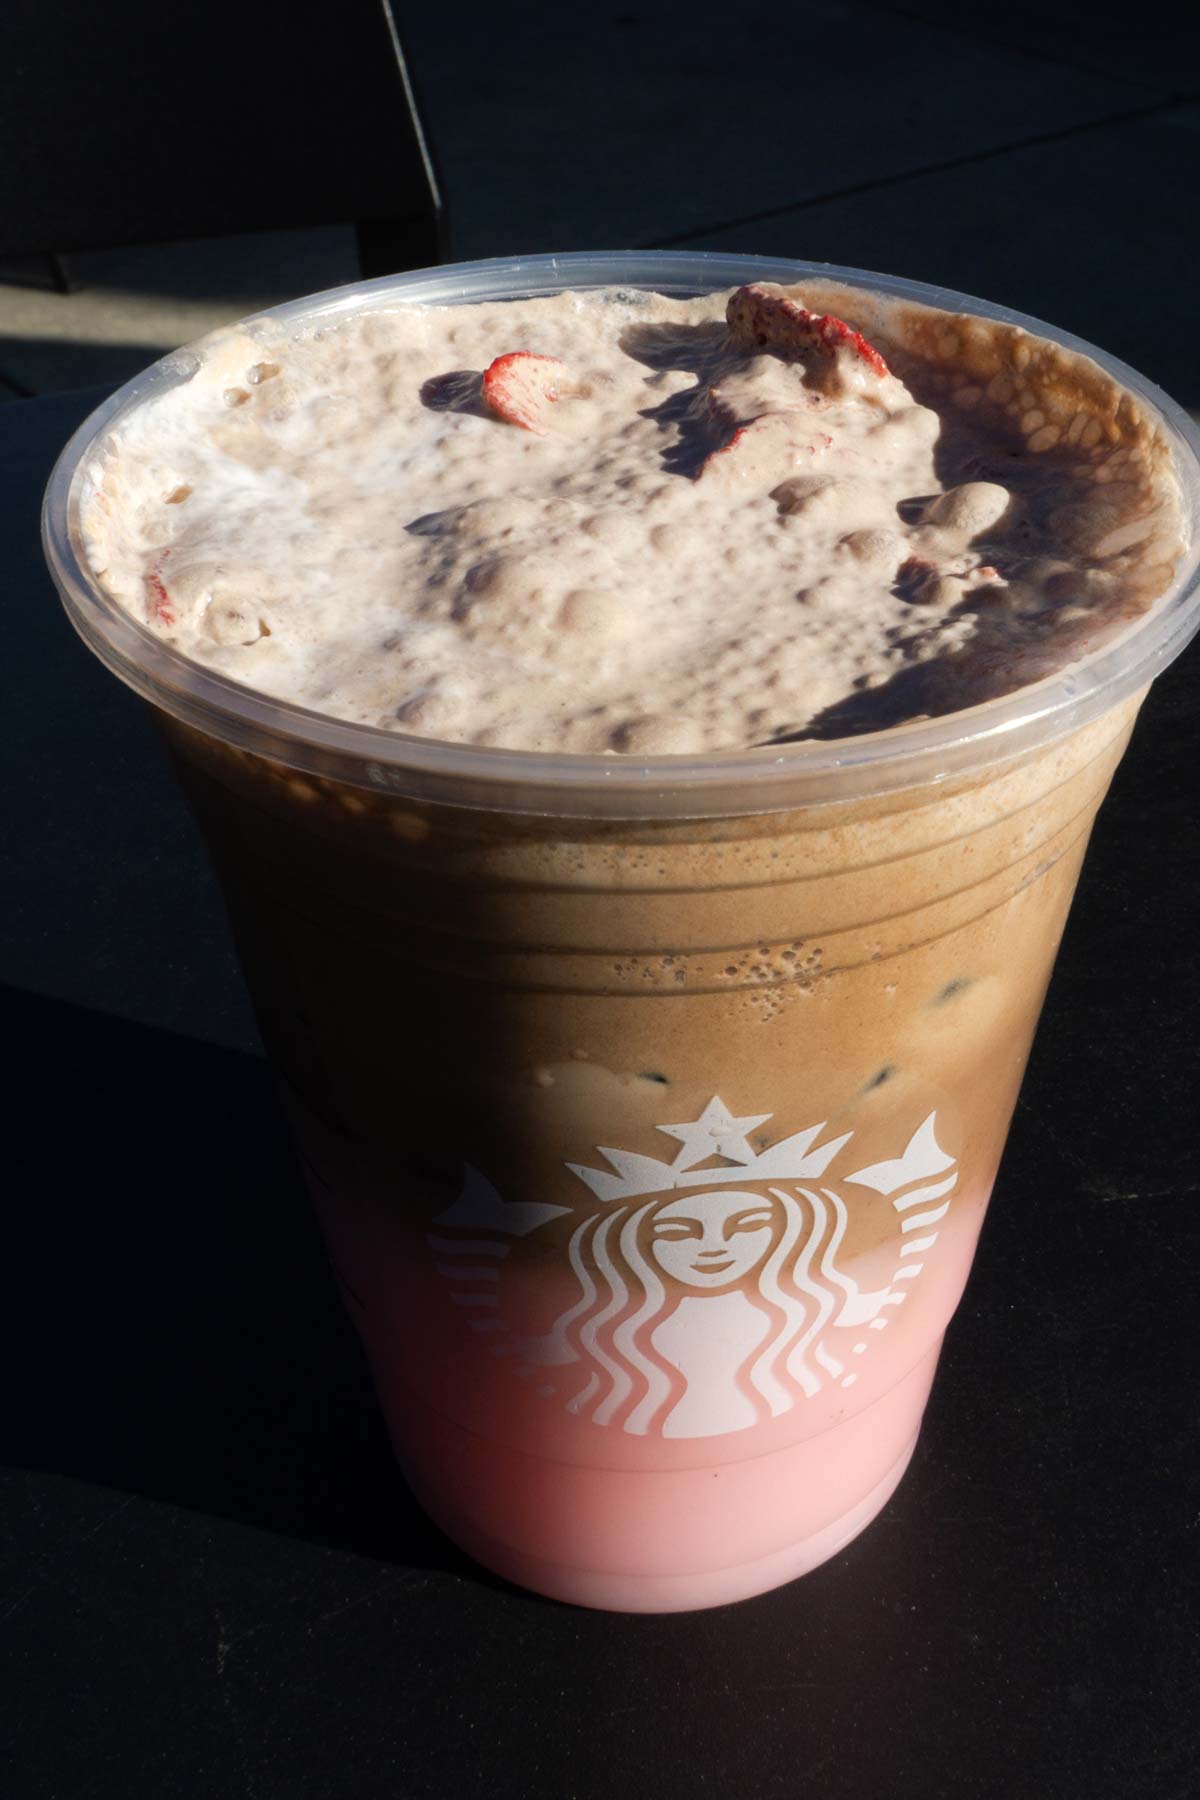 Grote beker Starbucks gelaagde Pink Drink met chocolade koudschuim in een beker met ijs bedekt met gedroogde aardbeien.